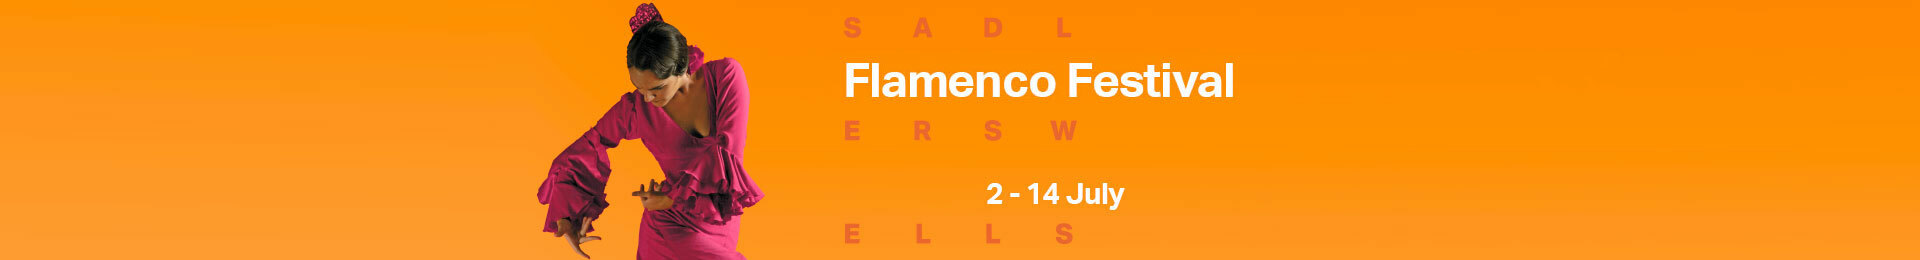 Flamenco Festival: Olga Pericet banner image